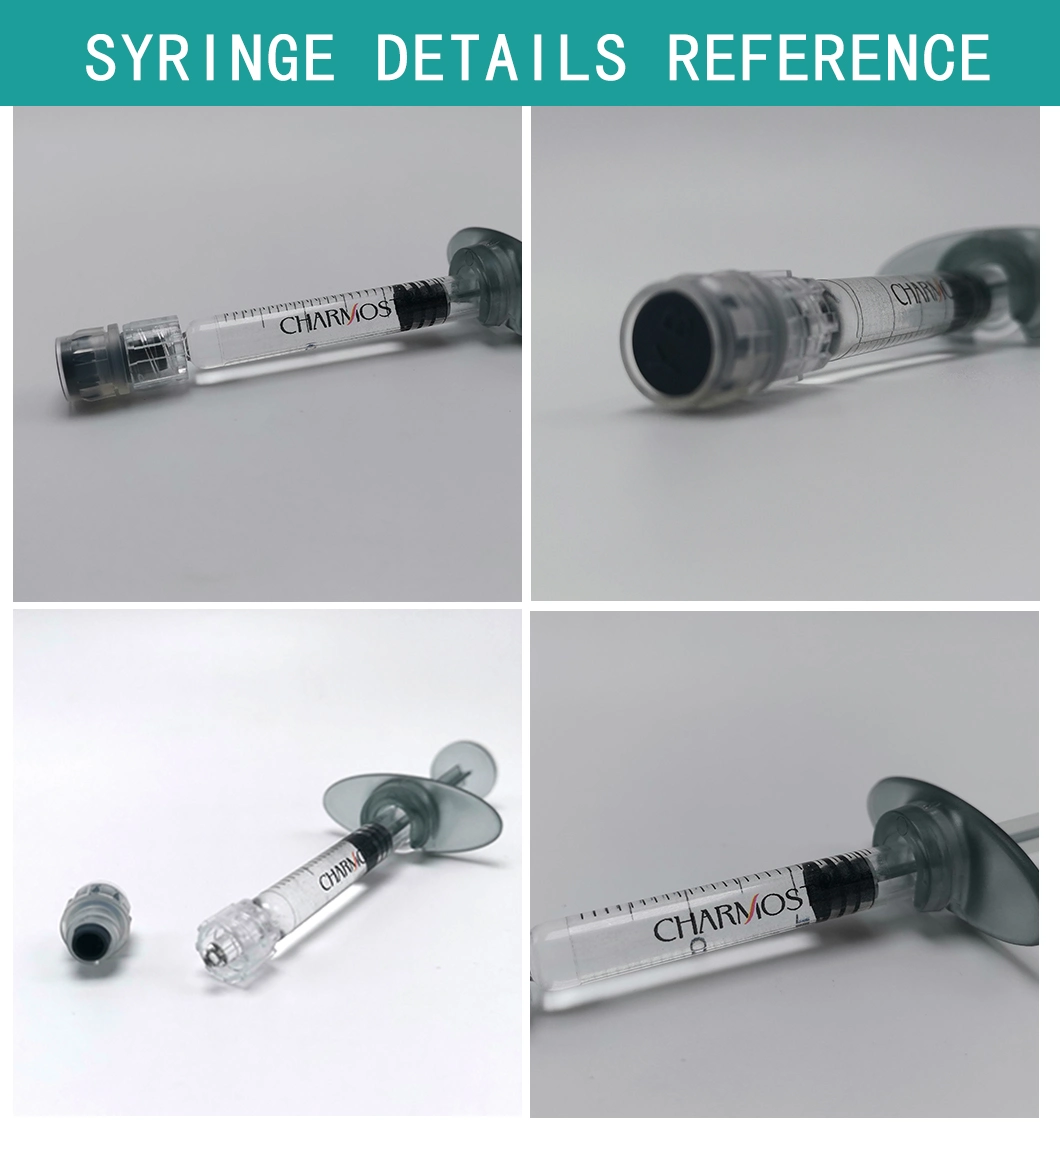 Injectable Hyaluronic Acid Dermal Filler Prefilled Syringe Anti-Aging and Remove Wrinkles Fine Line 2ml